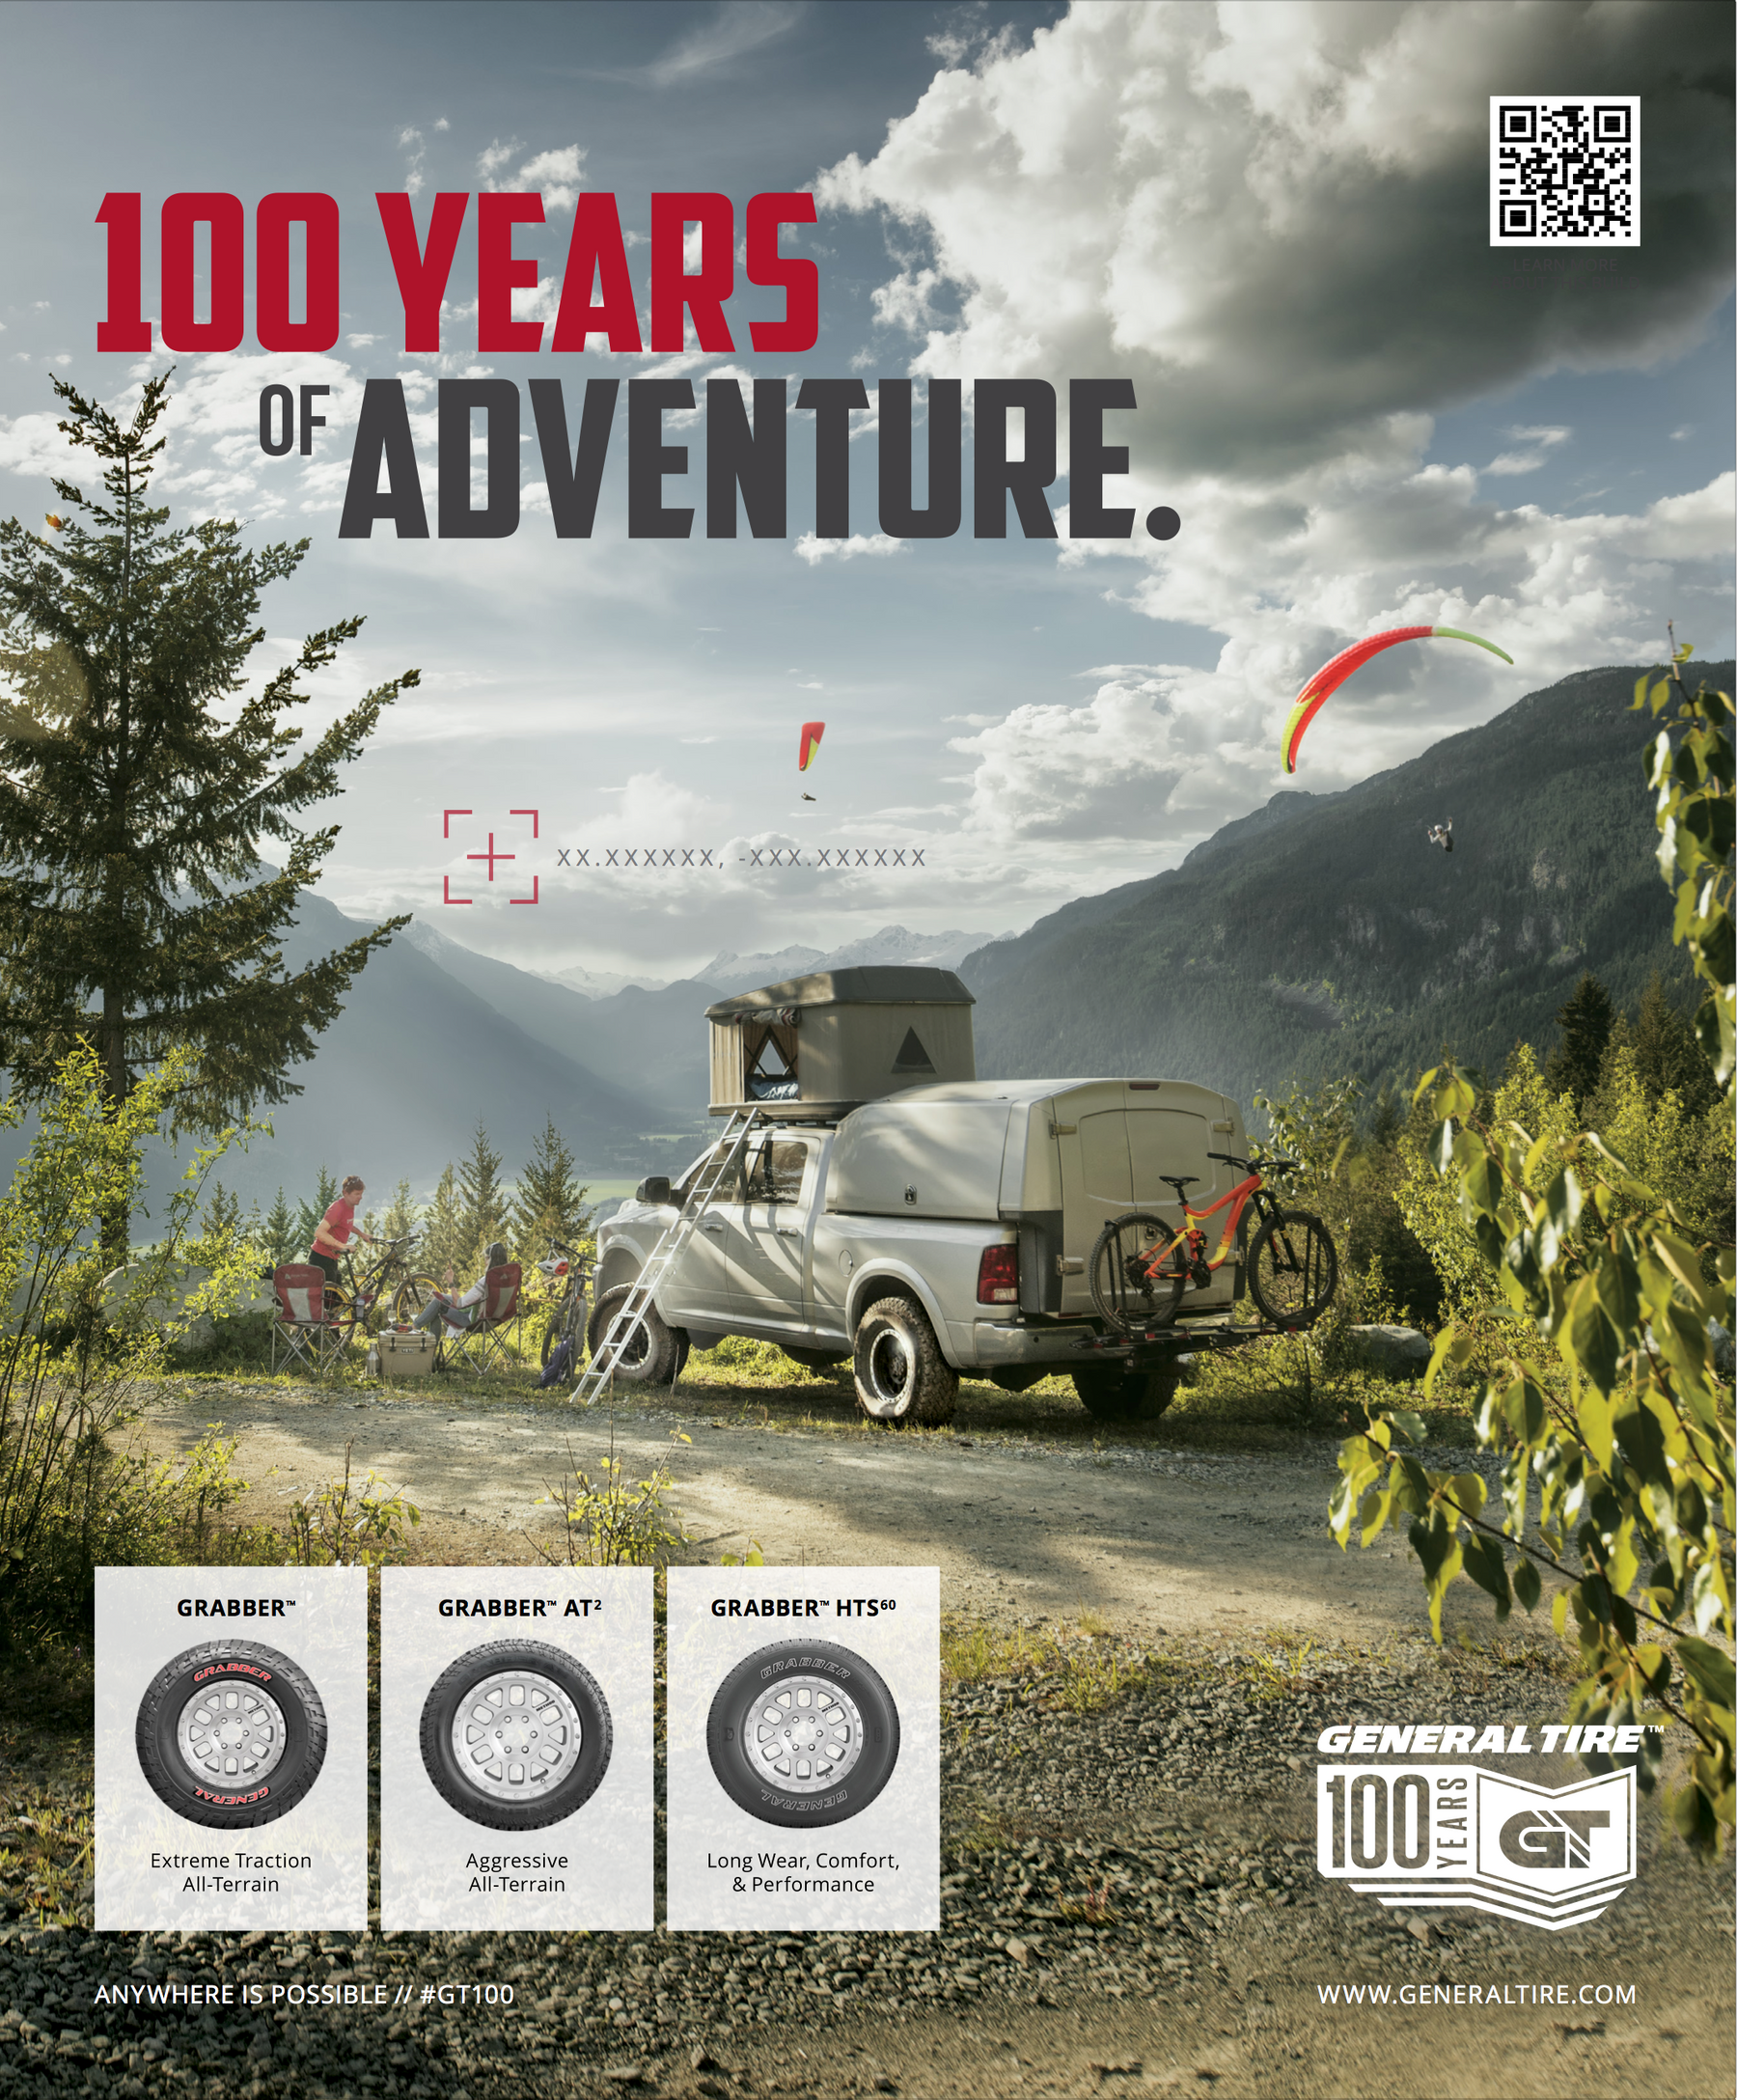 100 years of adventure